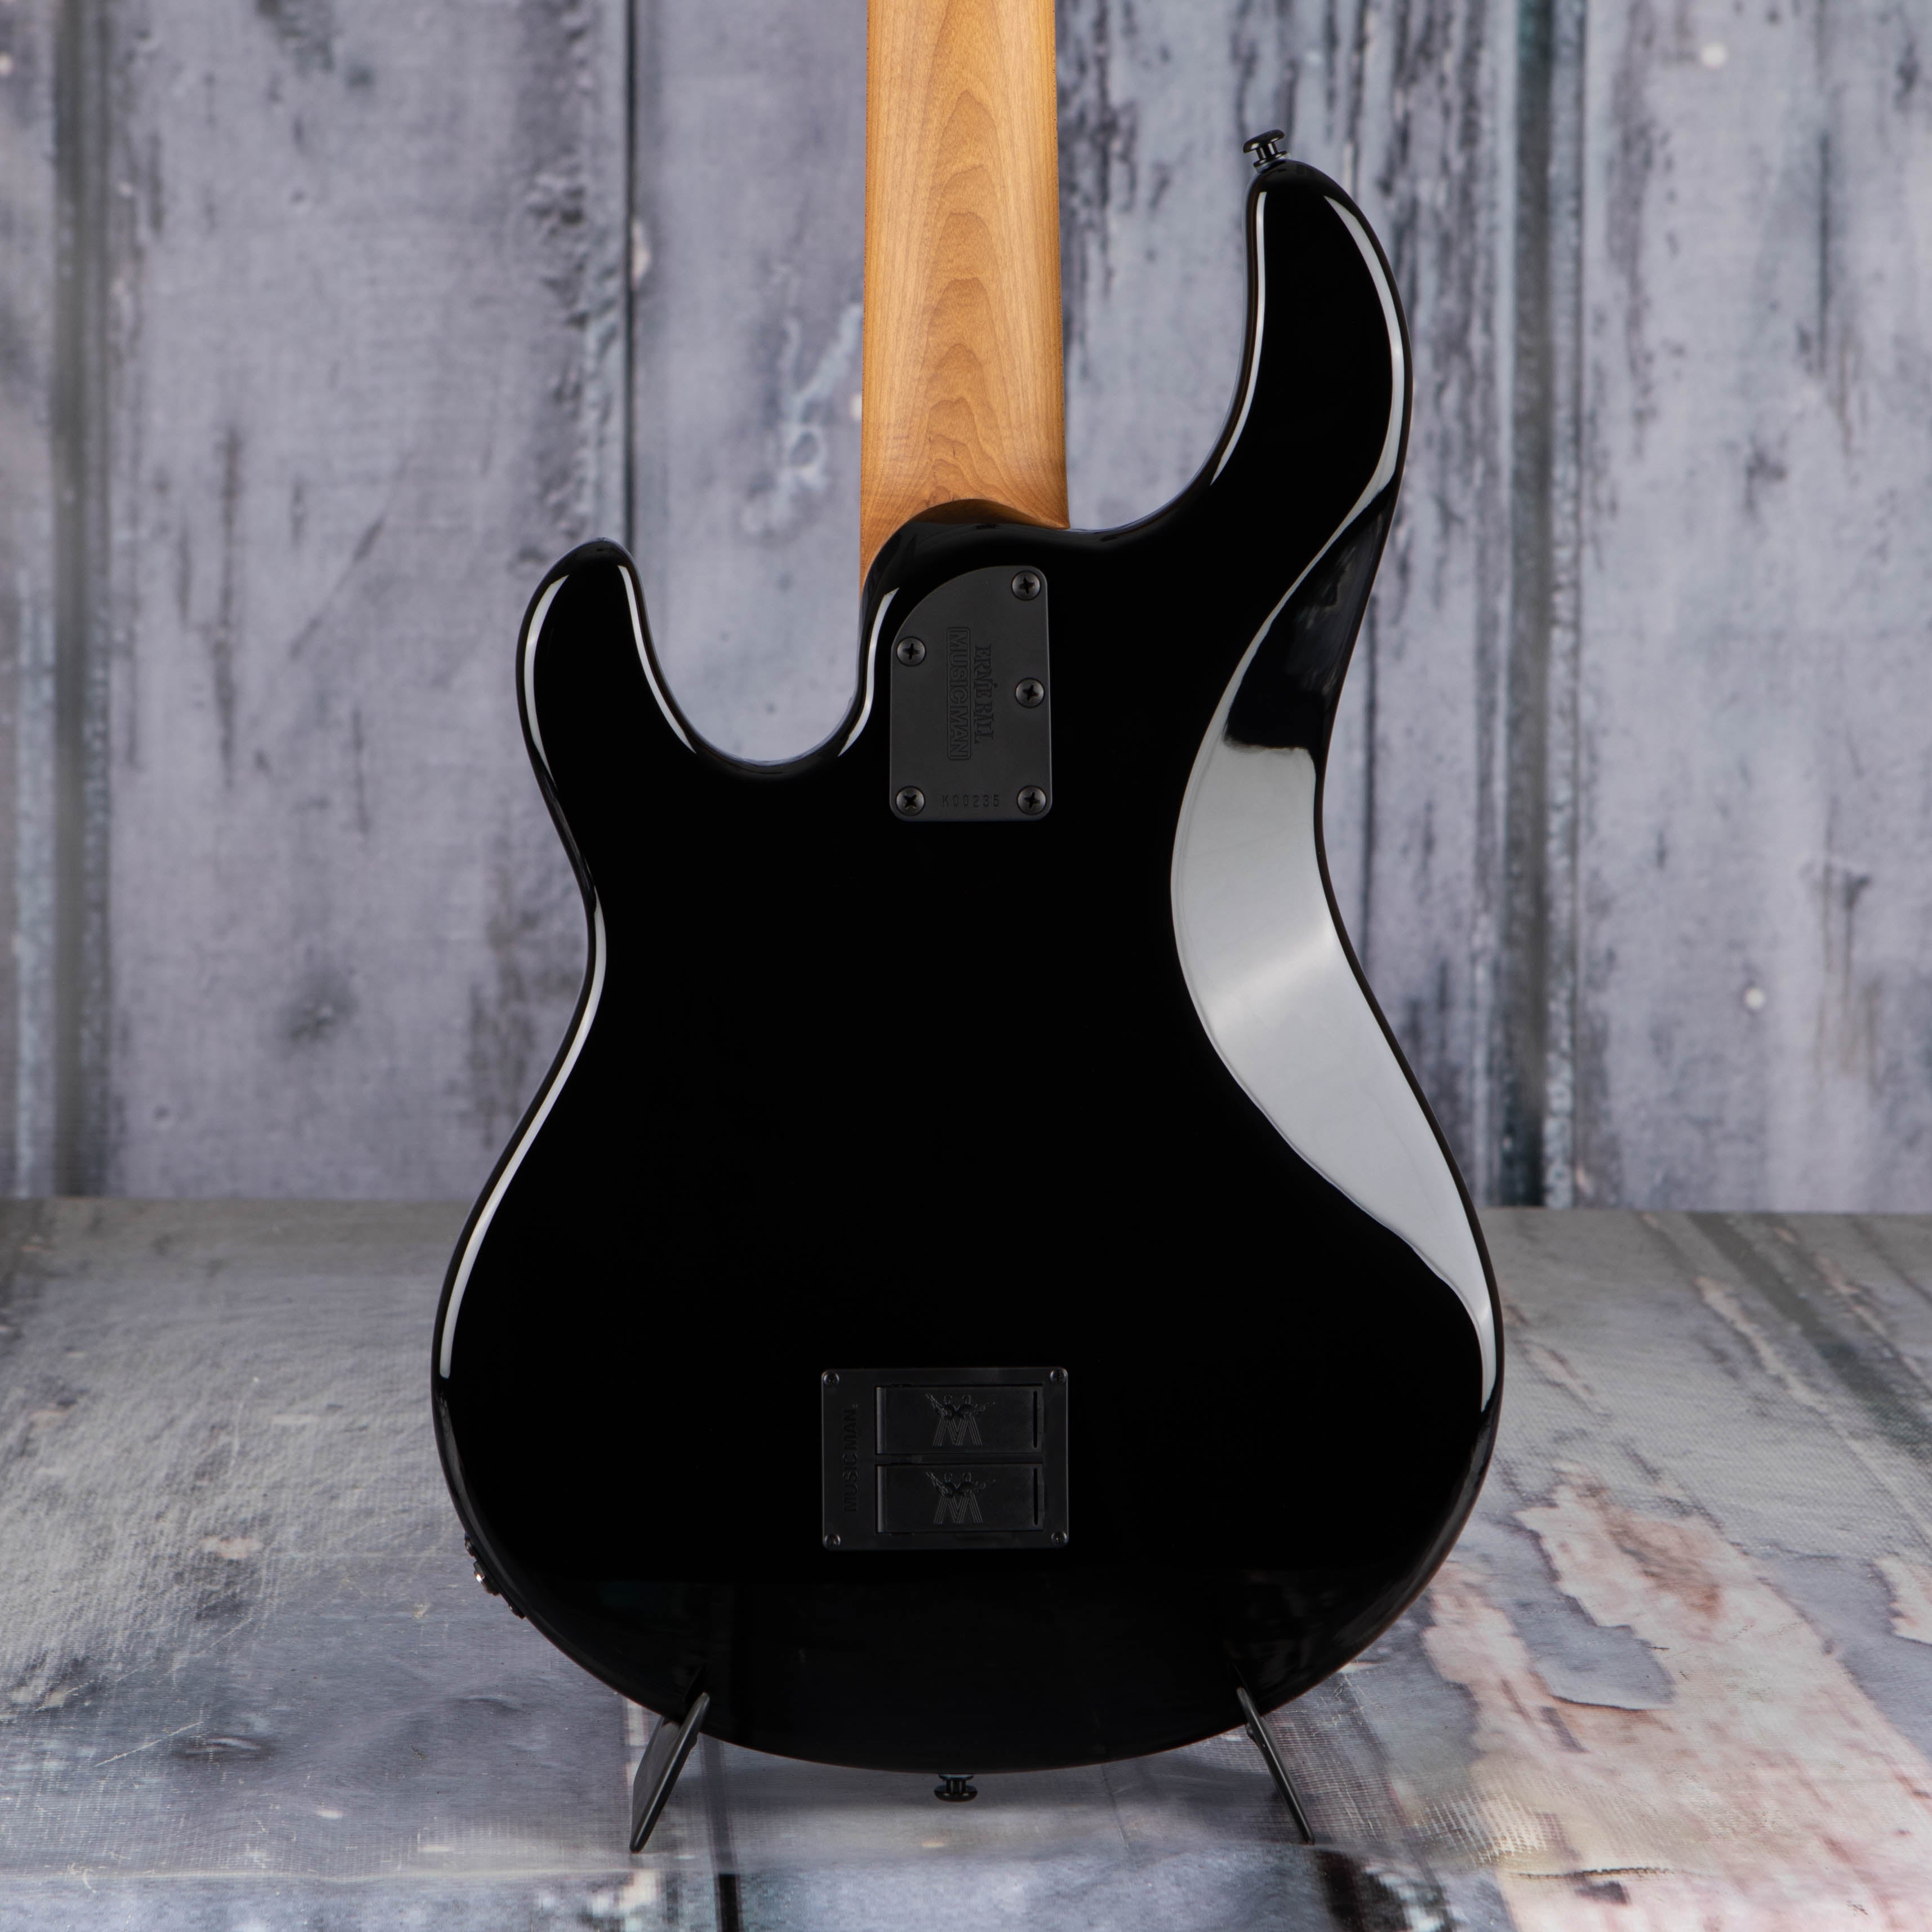 Ernie Ball Music Man StingRay Special 5 5-String Electric Bass Guitar, Black, back closeup